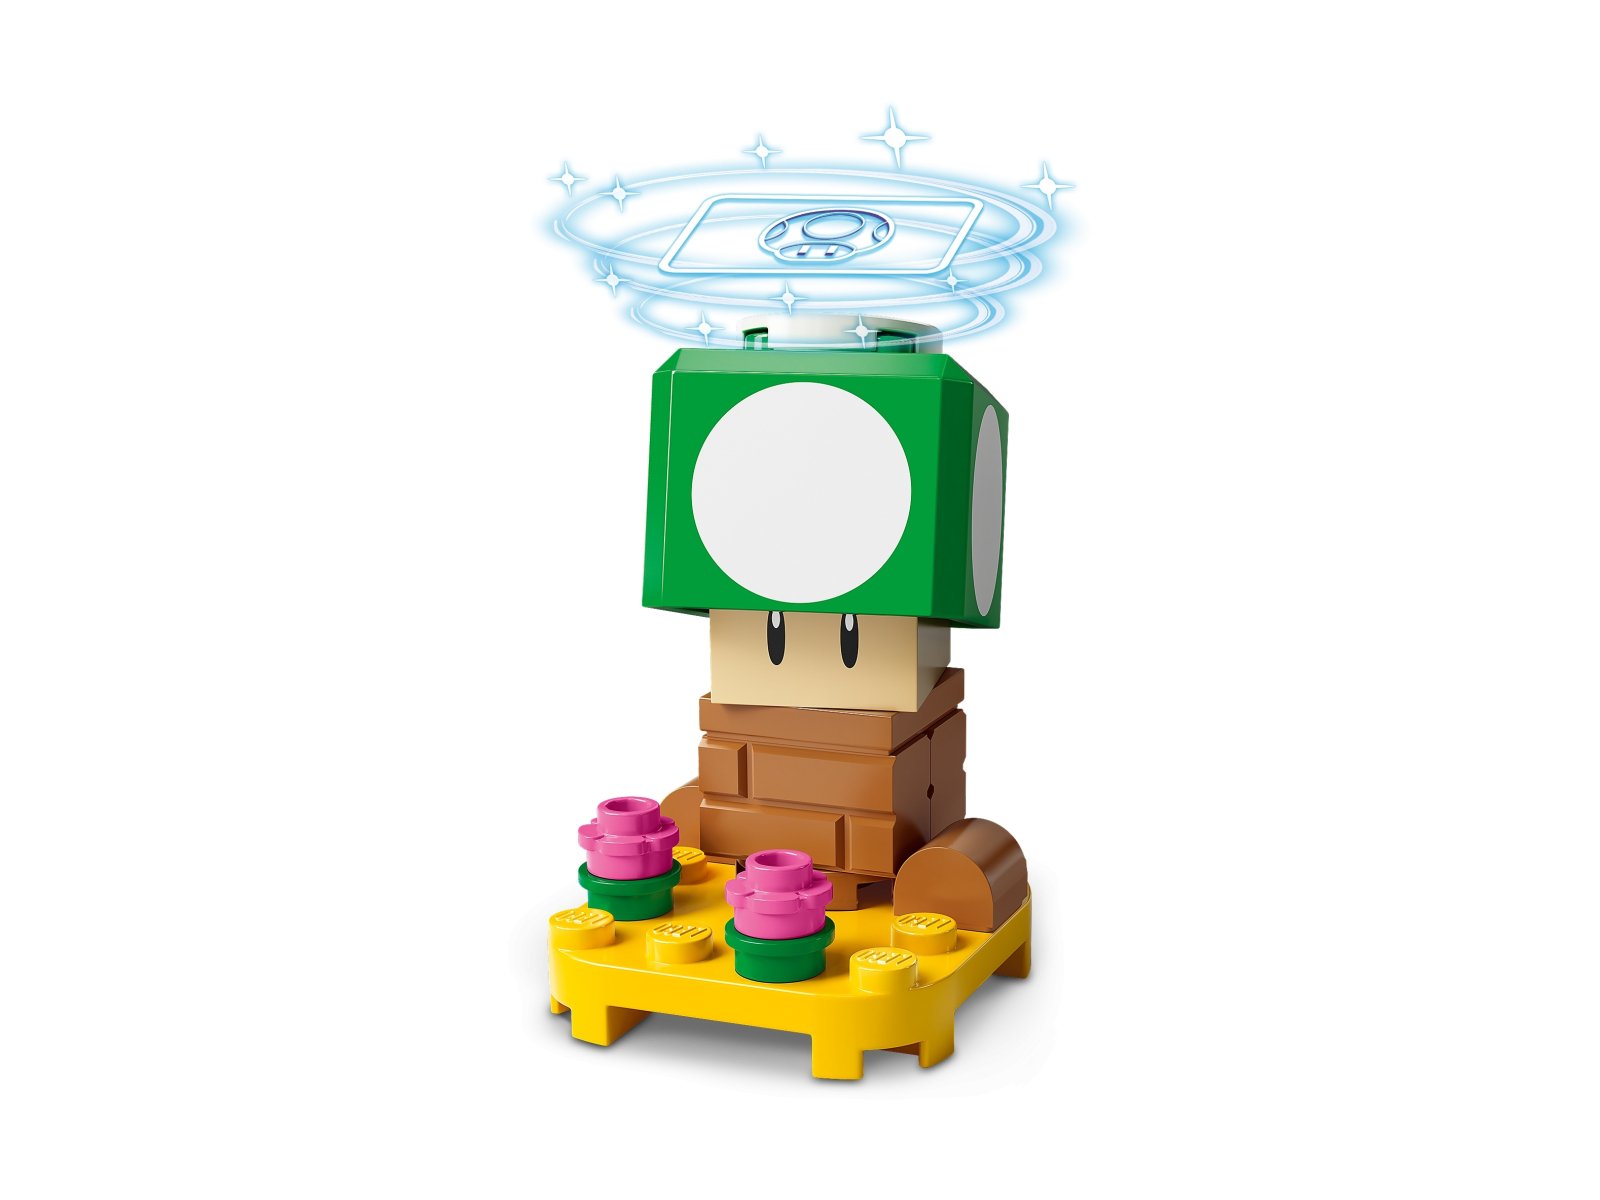 LEGO Super Mario Zestawy postaci — seria 3 71394